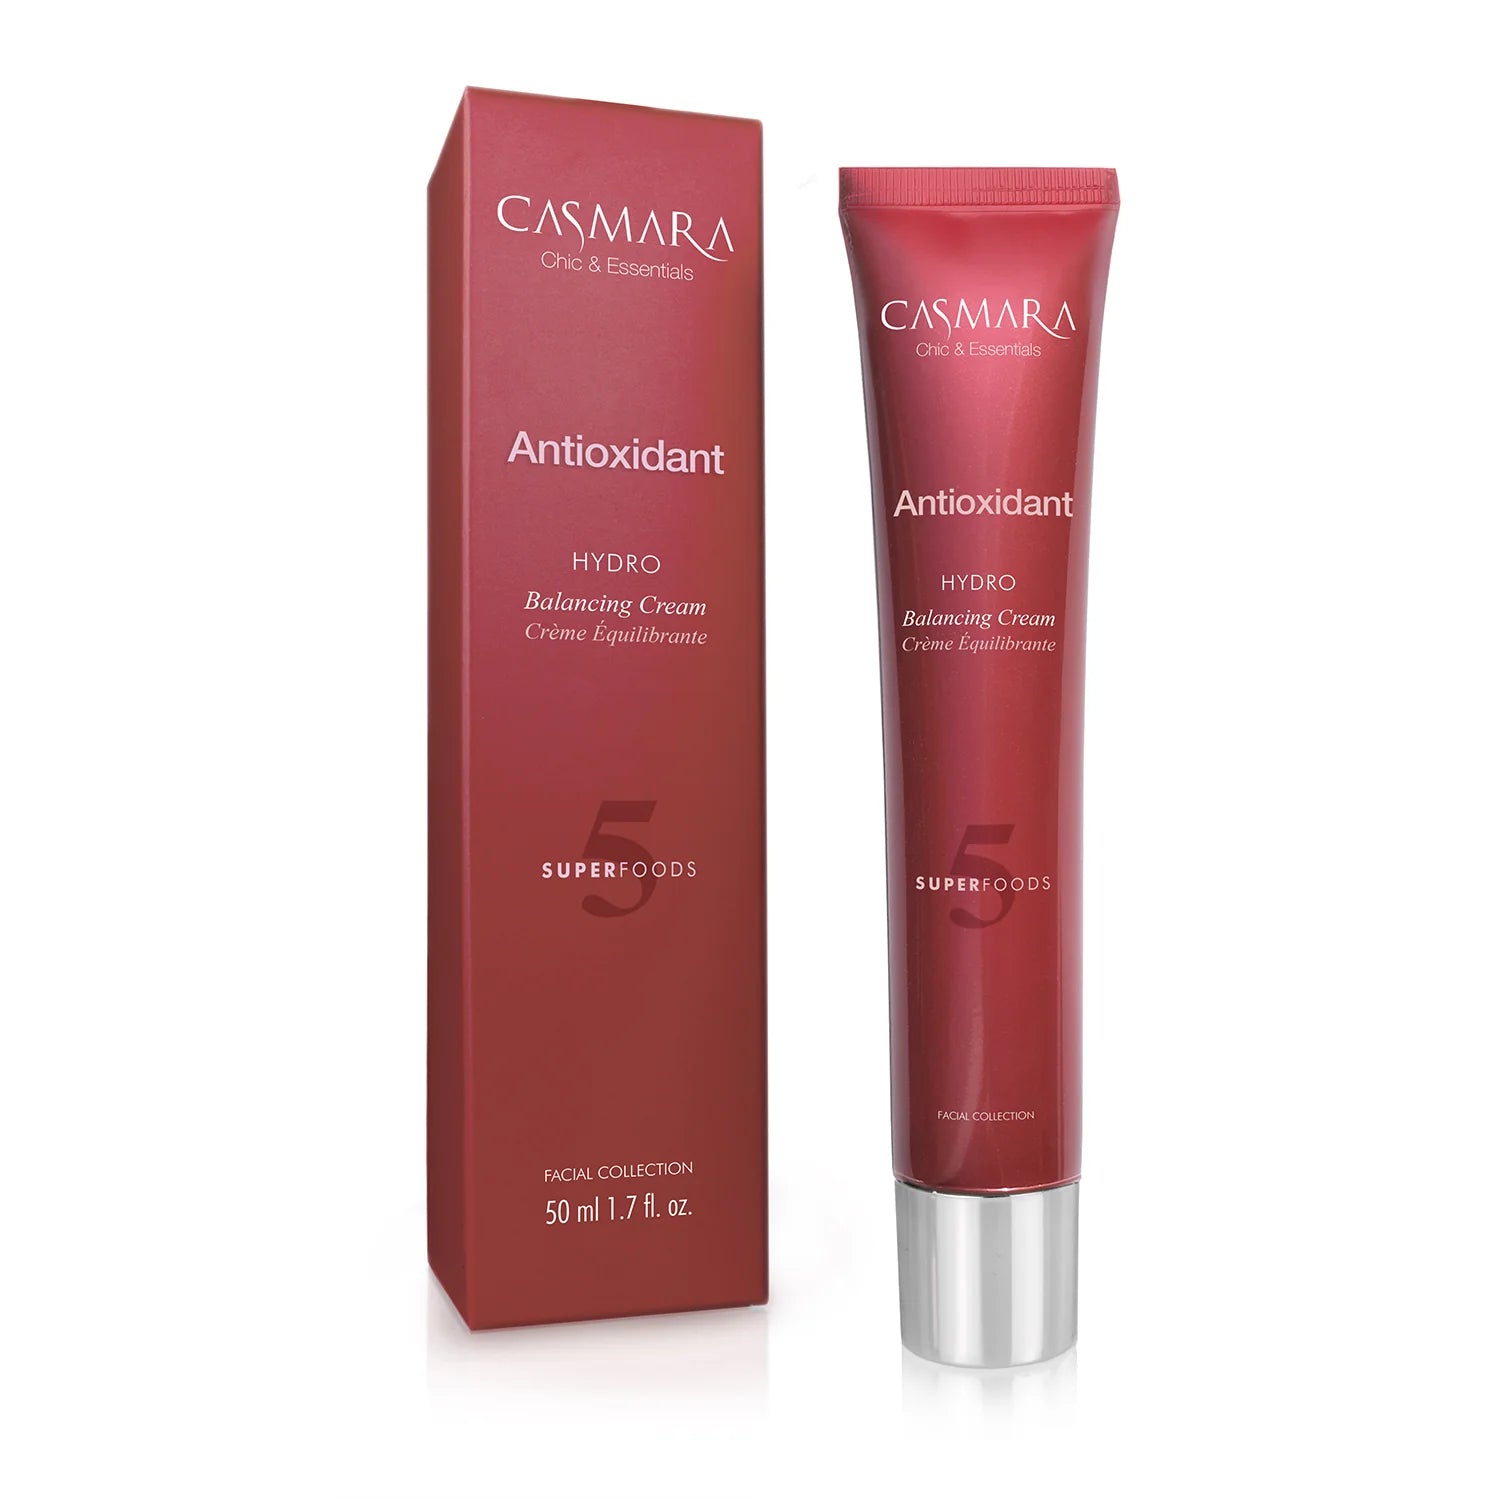 Casmara, Antioxidant Hydro Balancing Cream